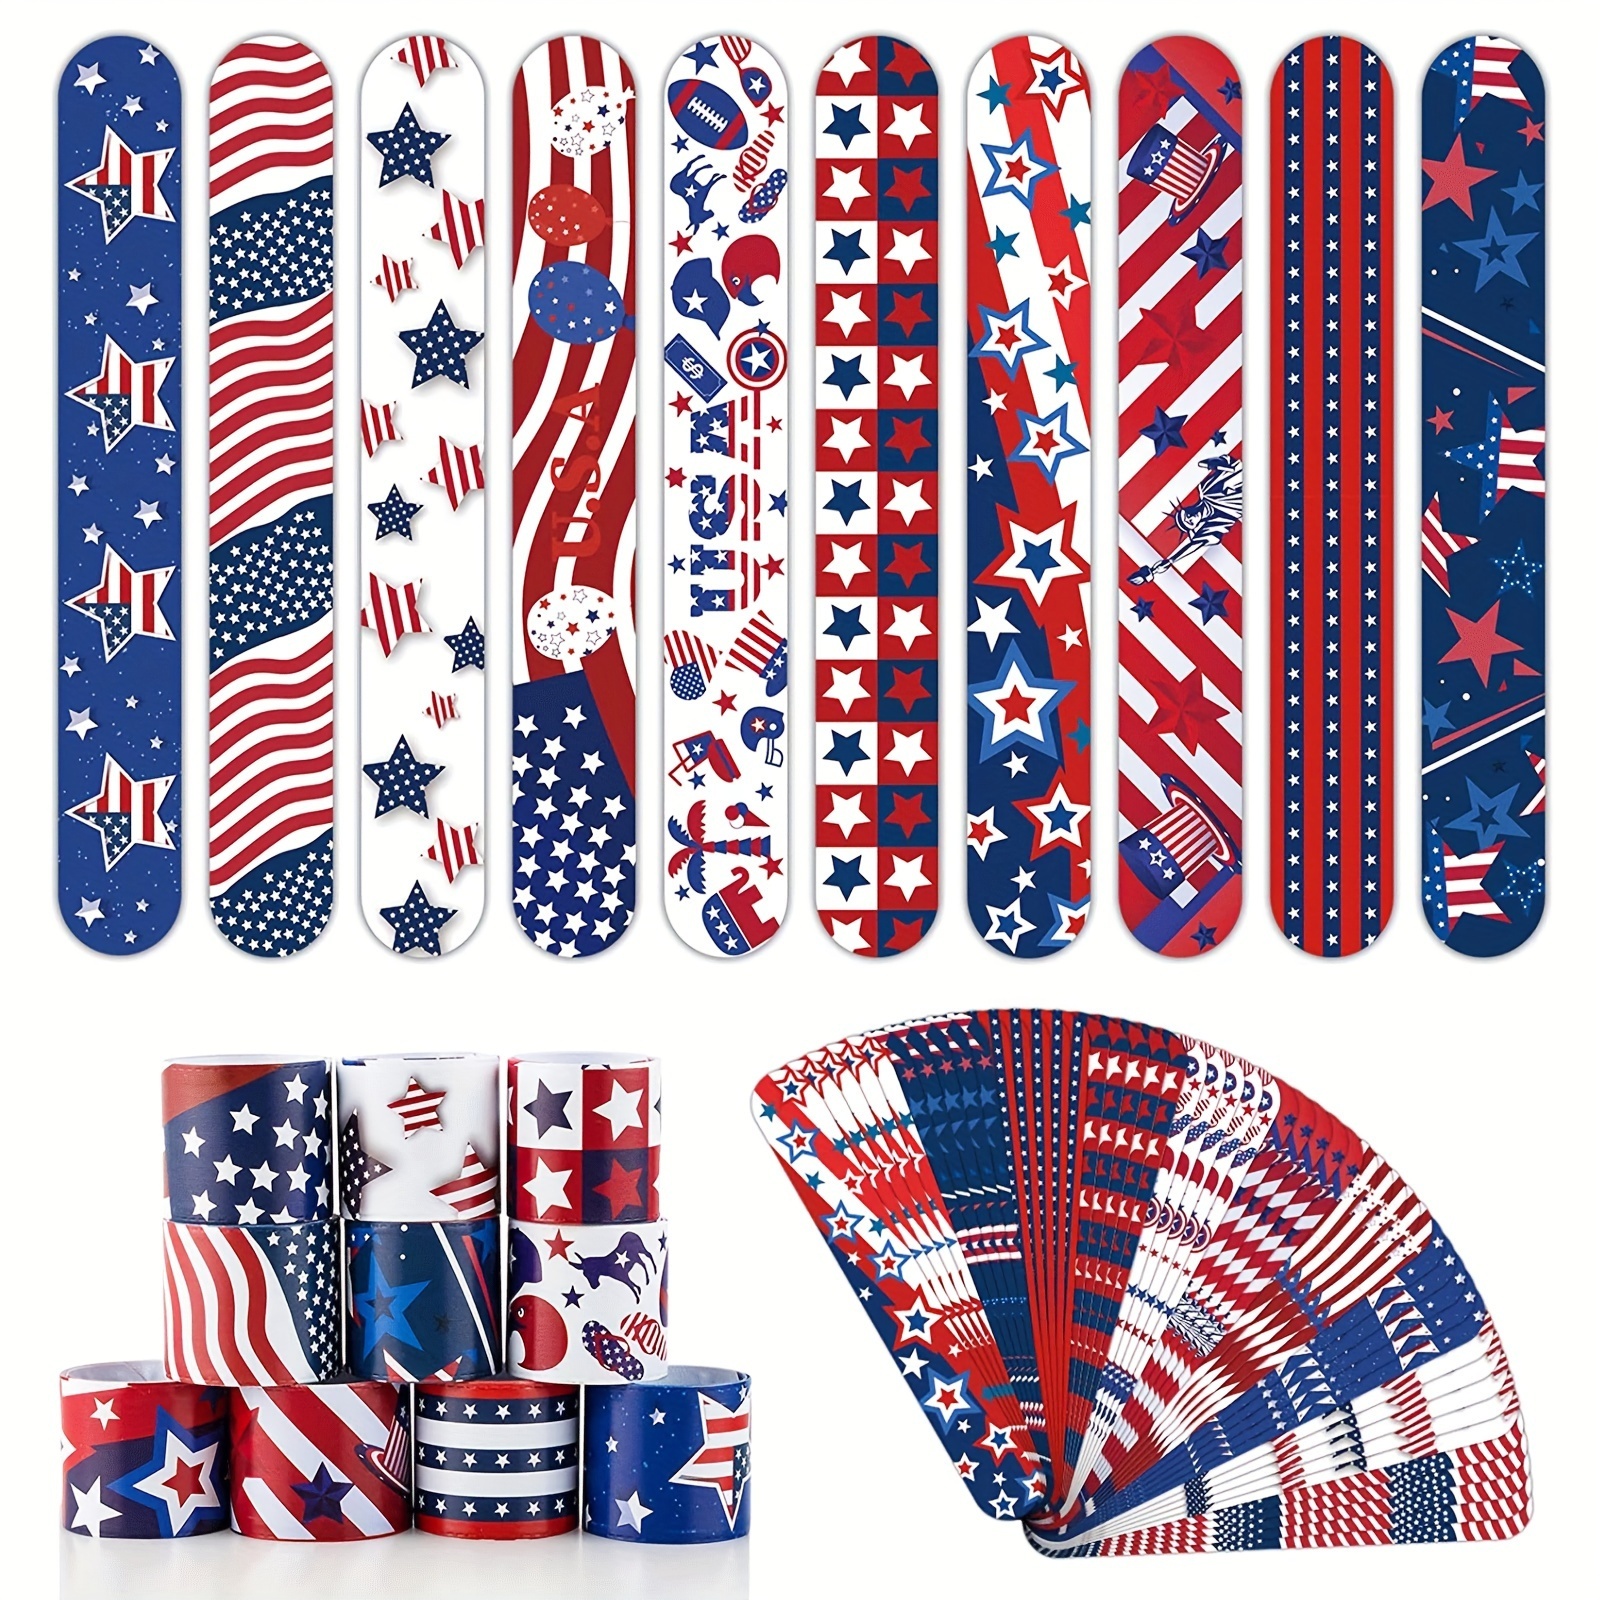 Patriotic Slap Bracelets for Kids, Set of 12, Stars and Stripes